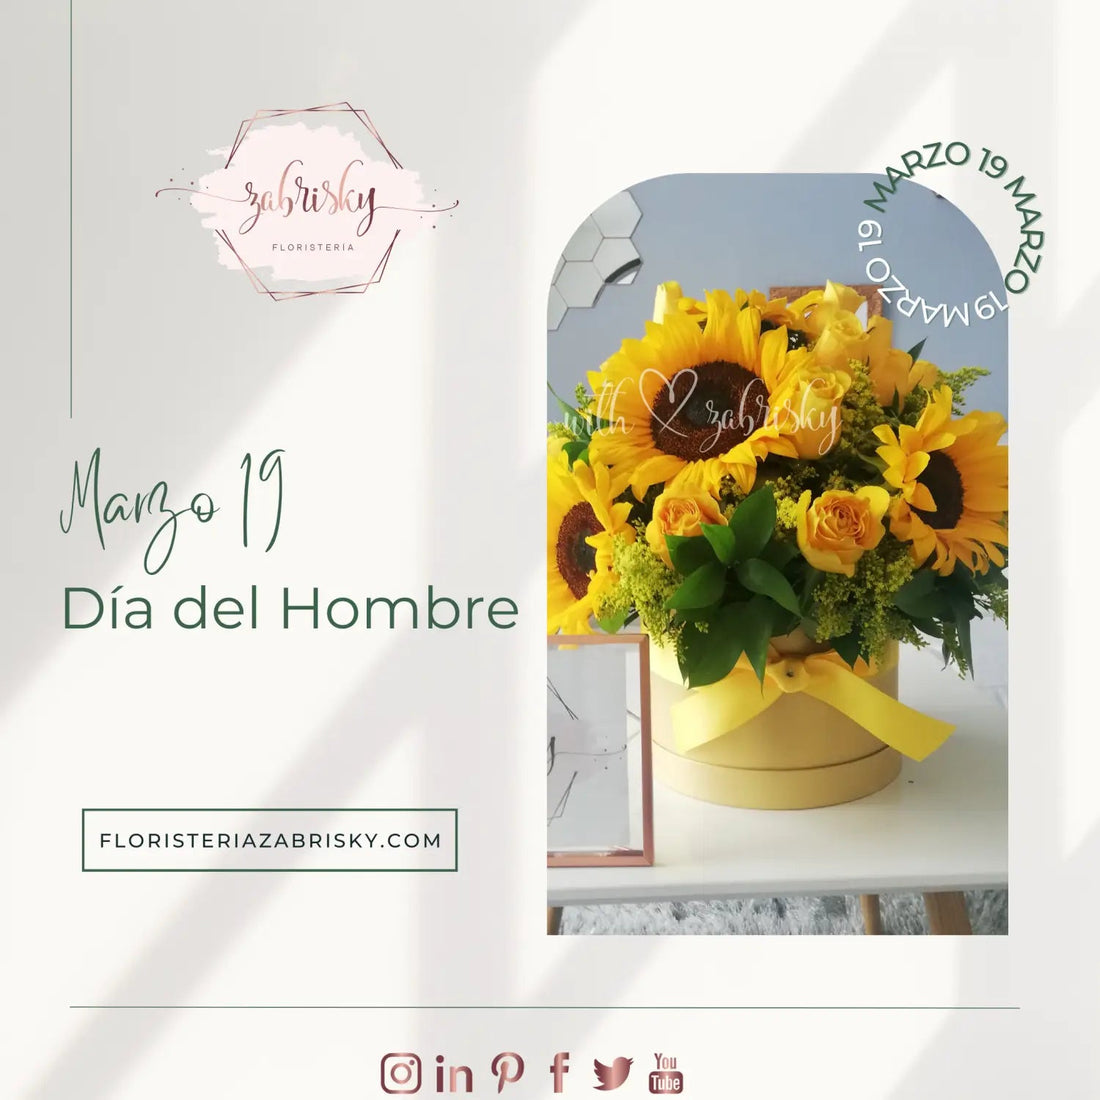 Celebra el #diadelhombre #marzo19 (Colombia) - Floristería Zabrisky